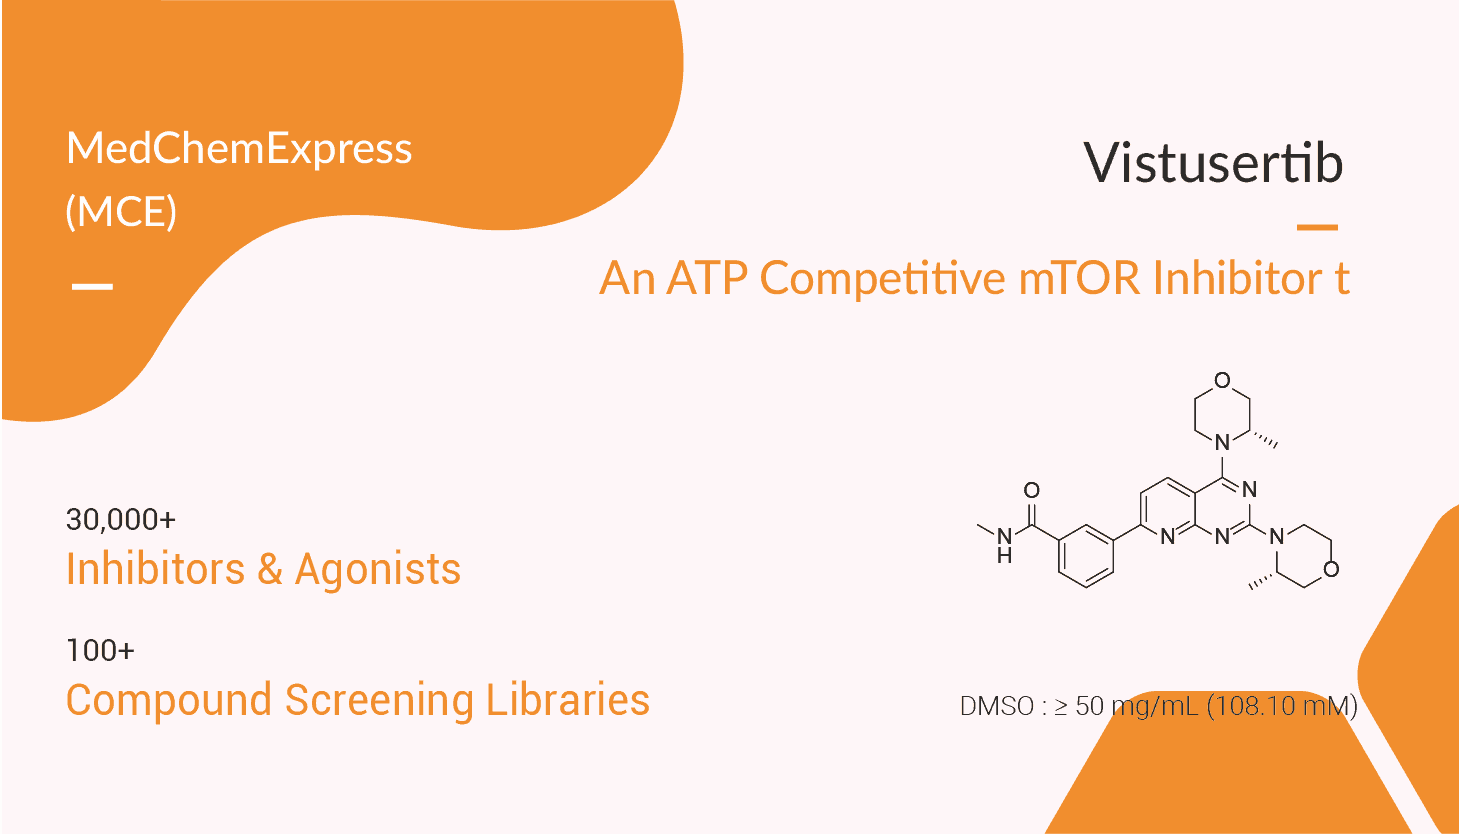 Vistusertib (AZD2014) is an ATP Competitive mTOR Inhibitor